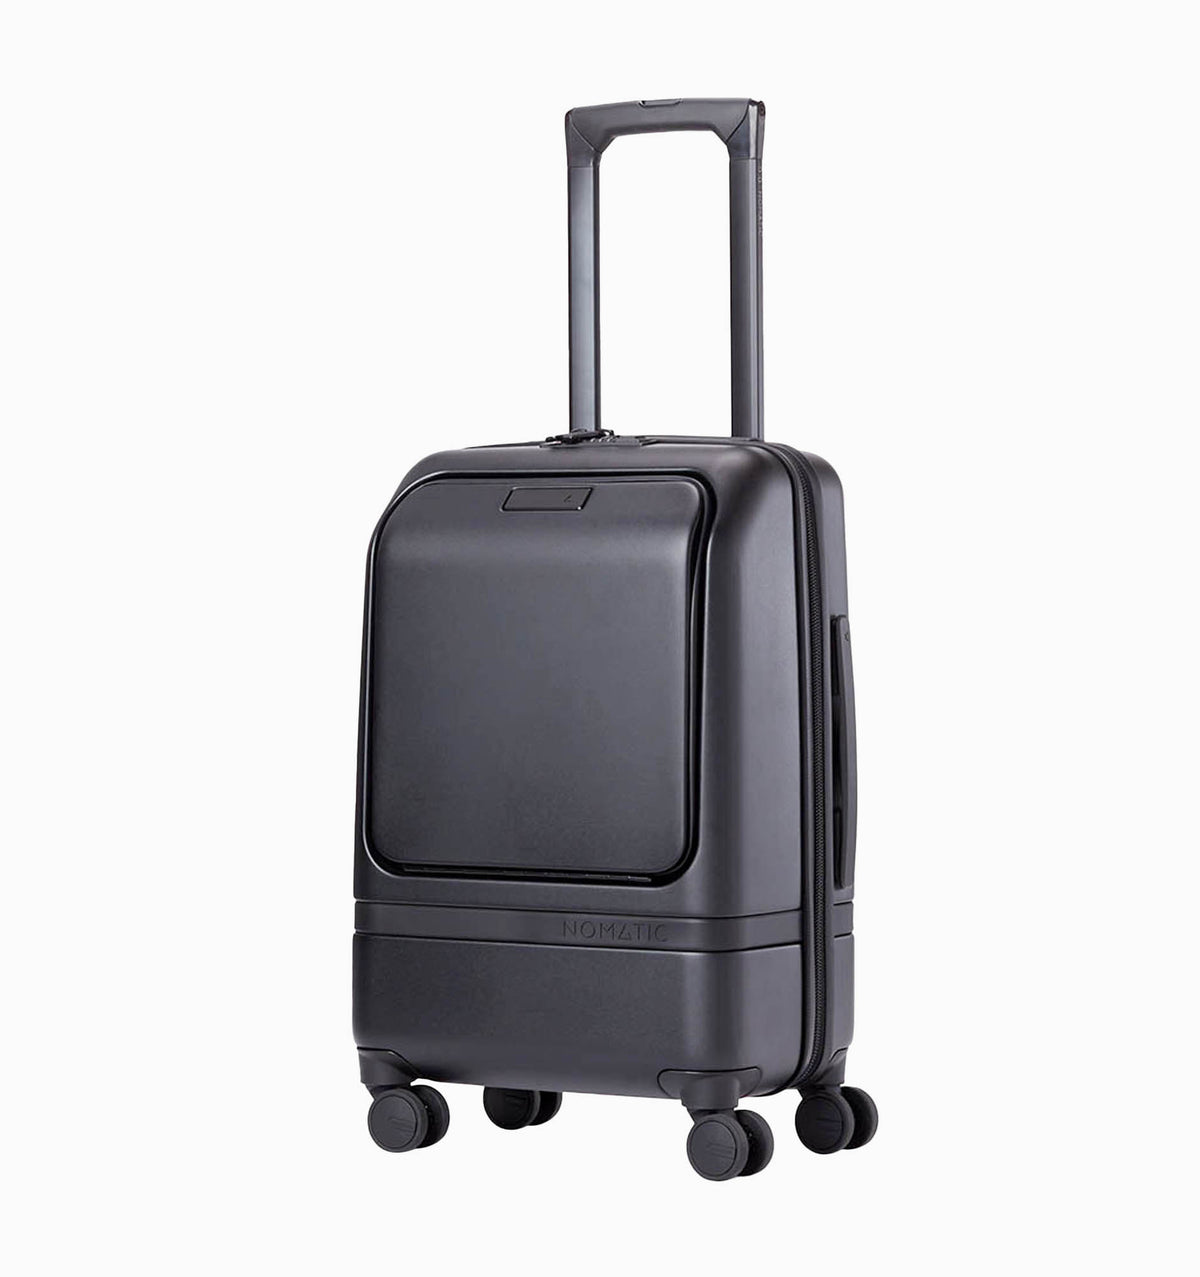 Nomatic Carry-On Pro Luggage 29L - Black